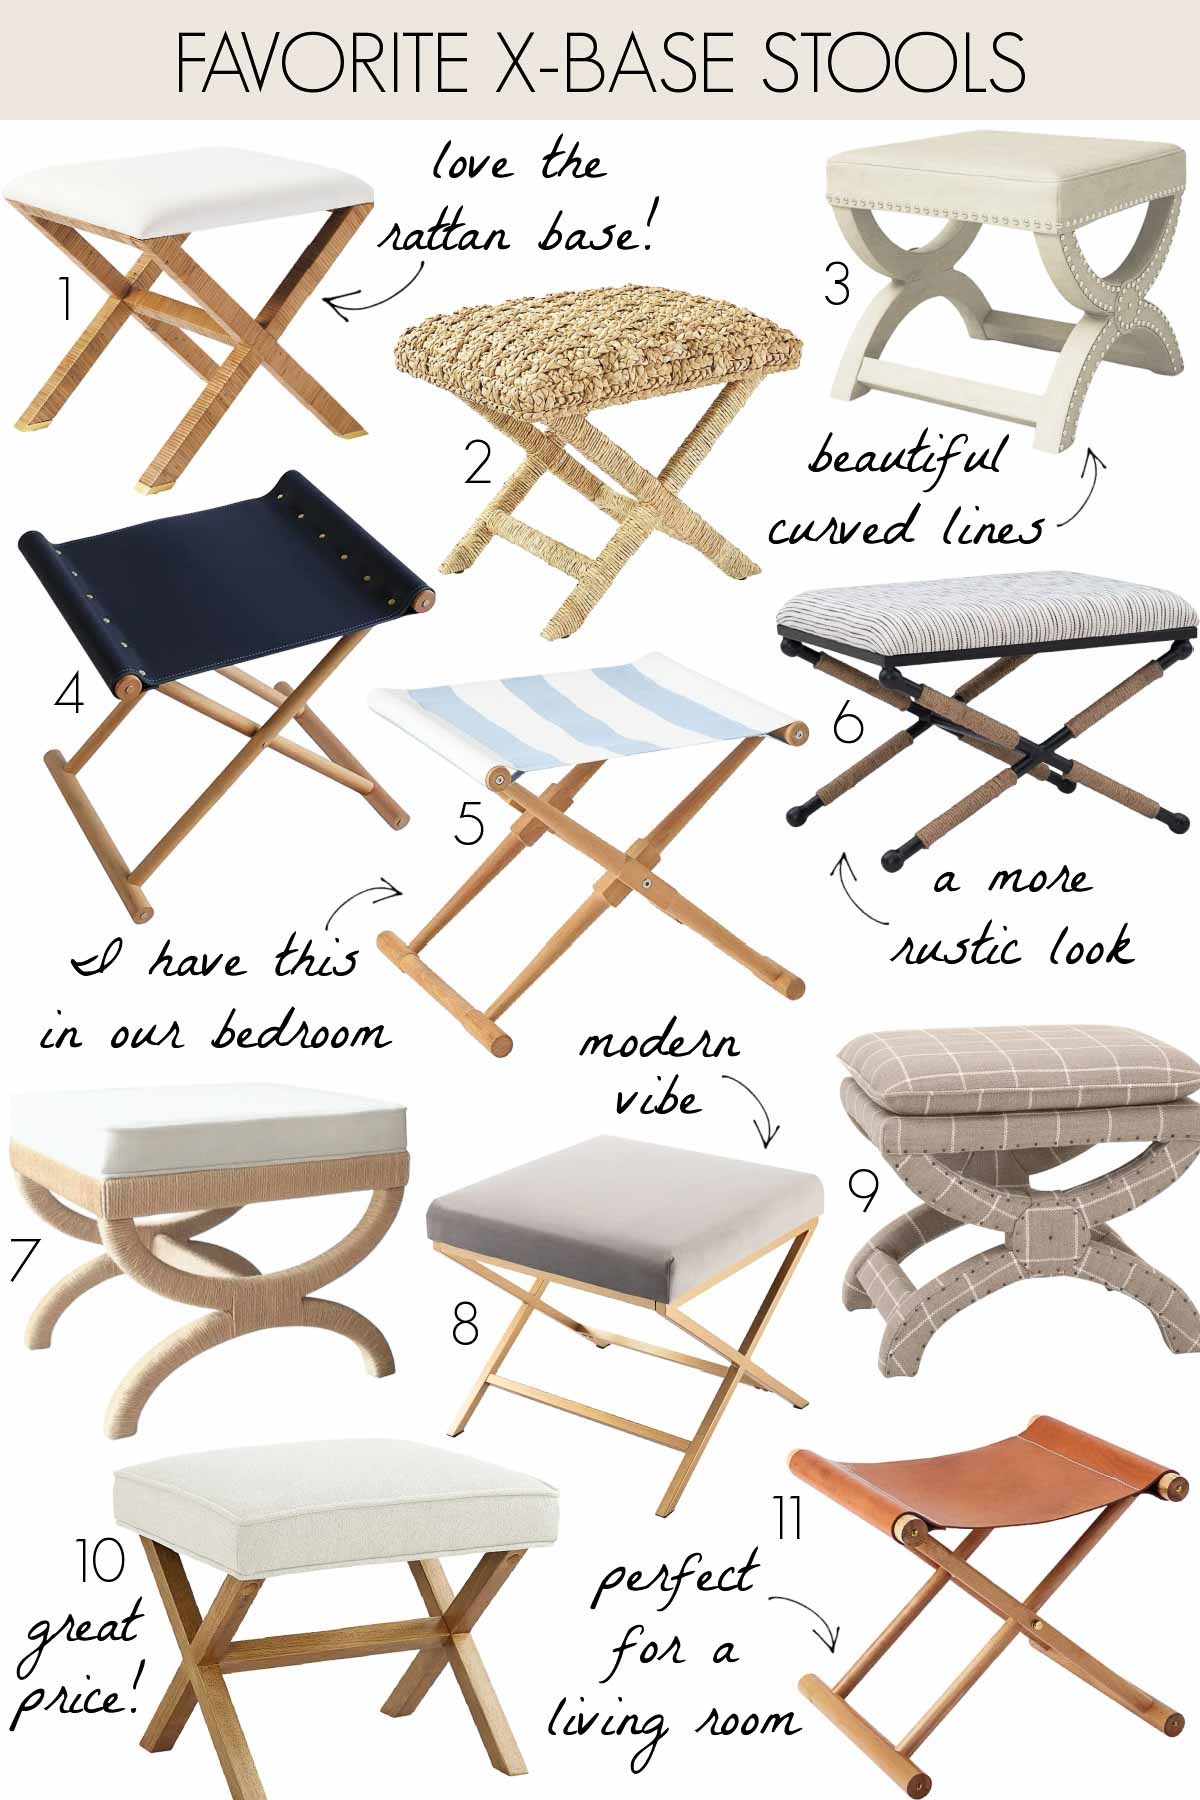 Favorite X-base stools